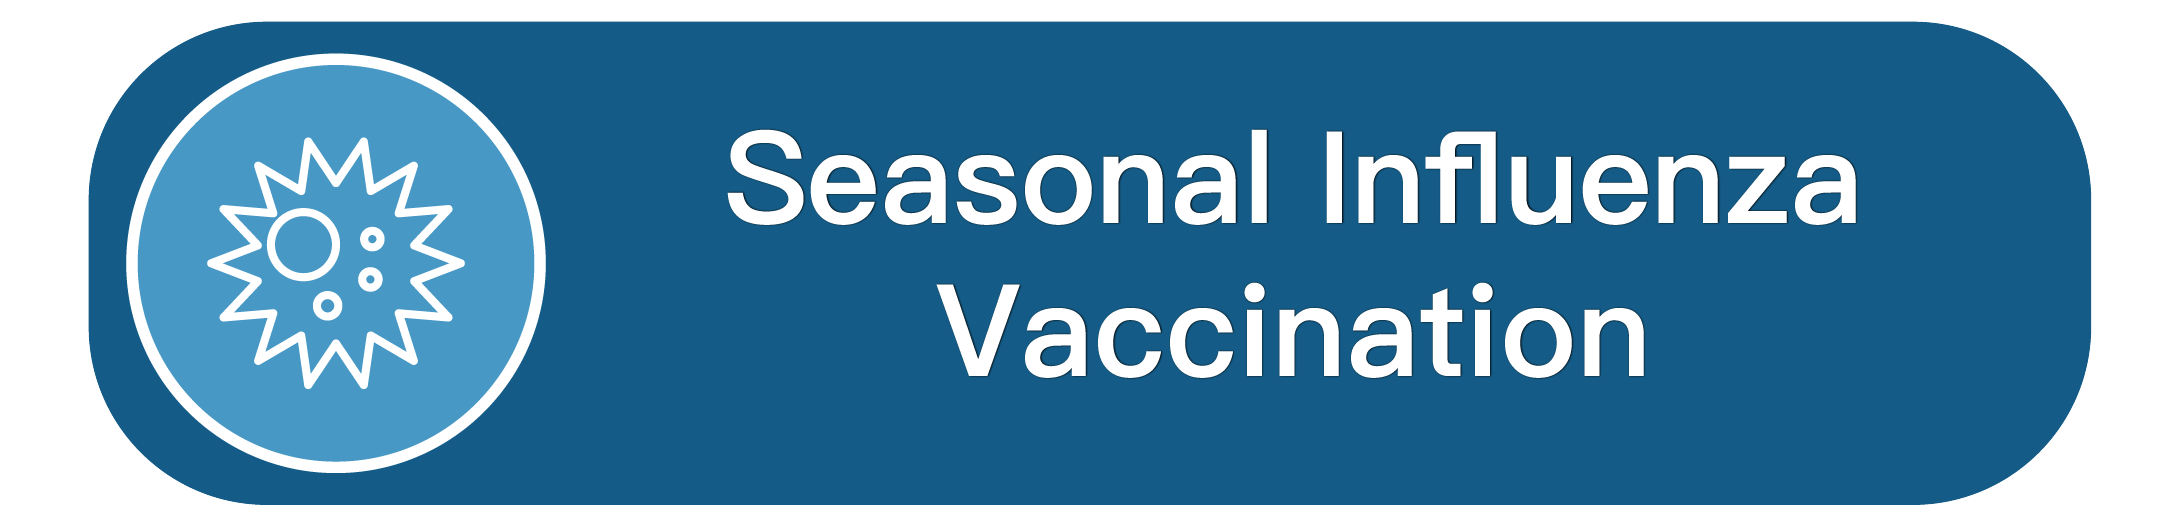 Seasonal Influenza Vaccination